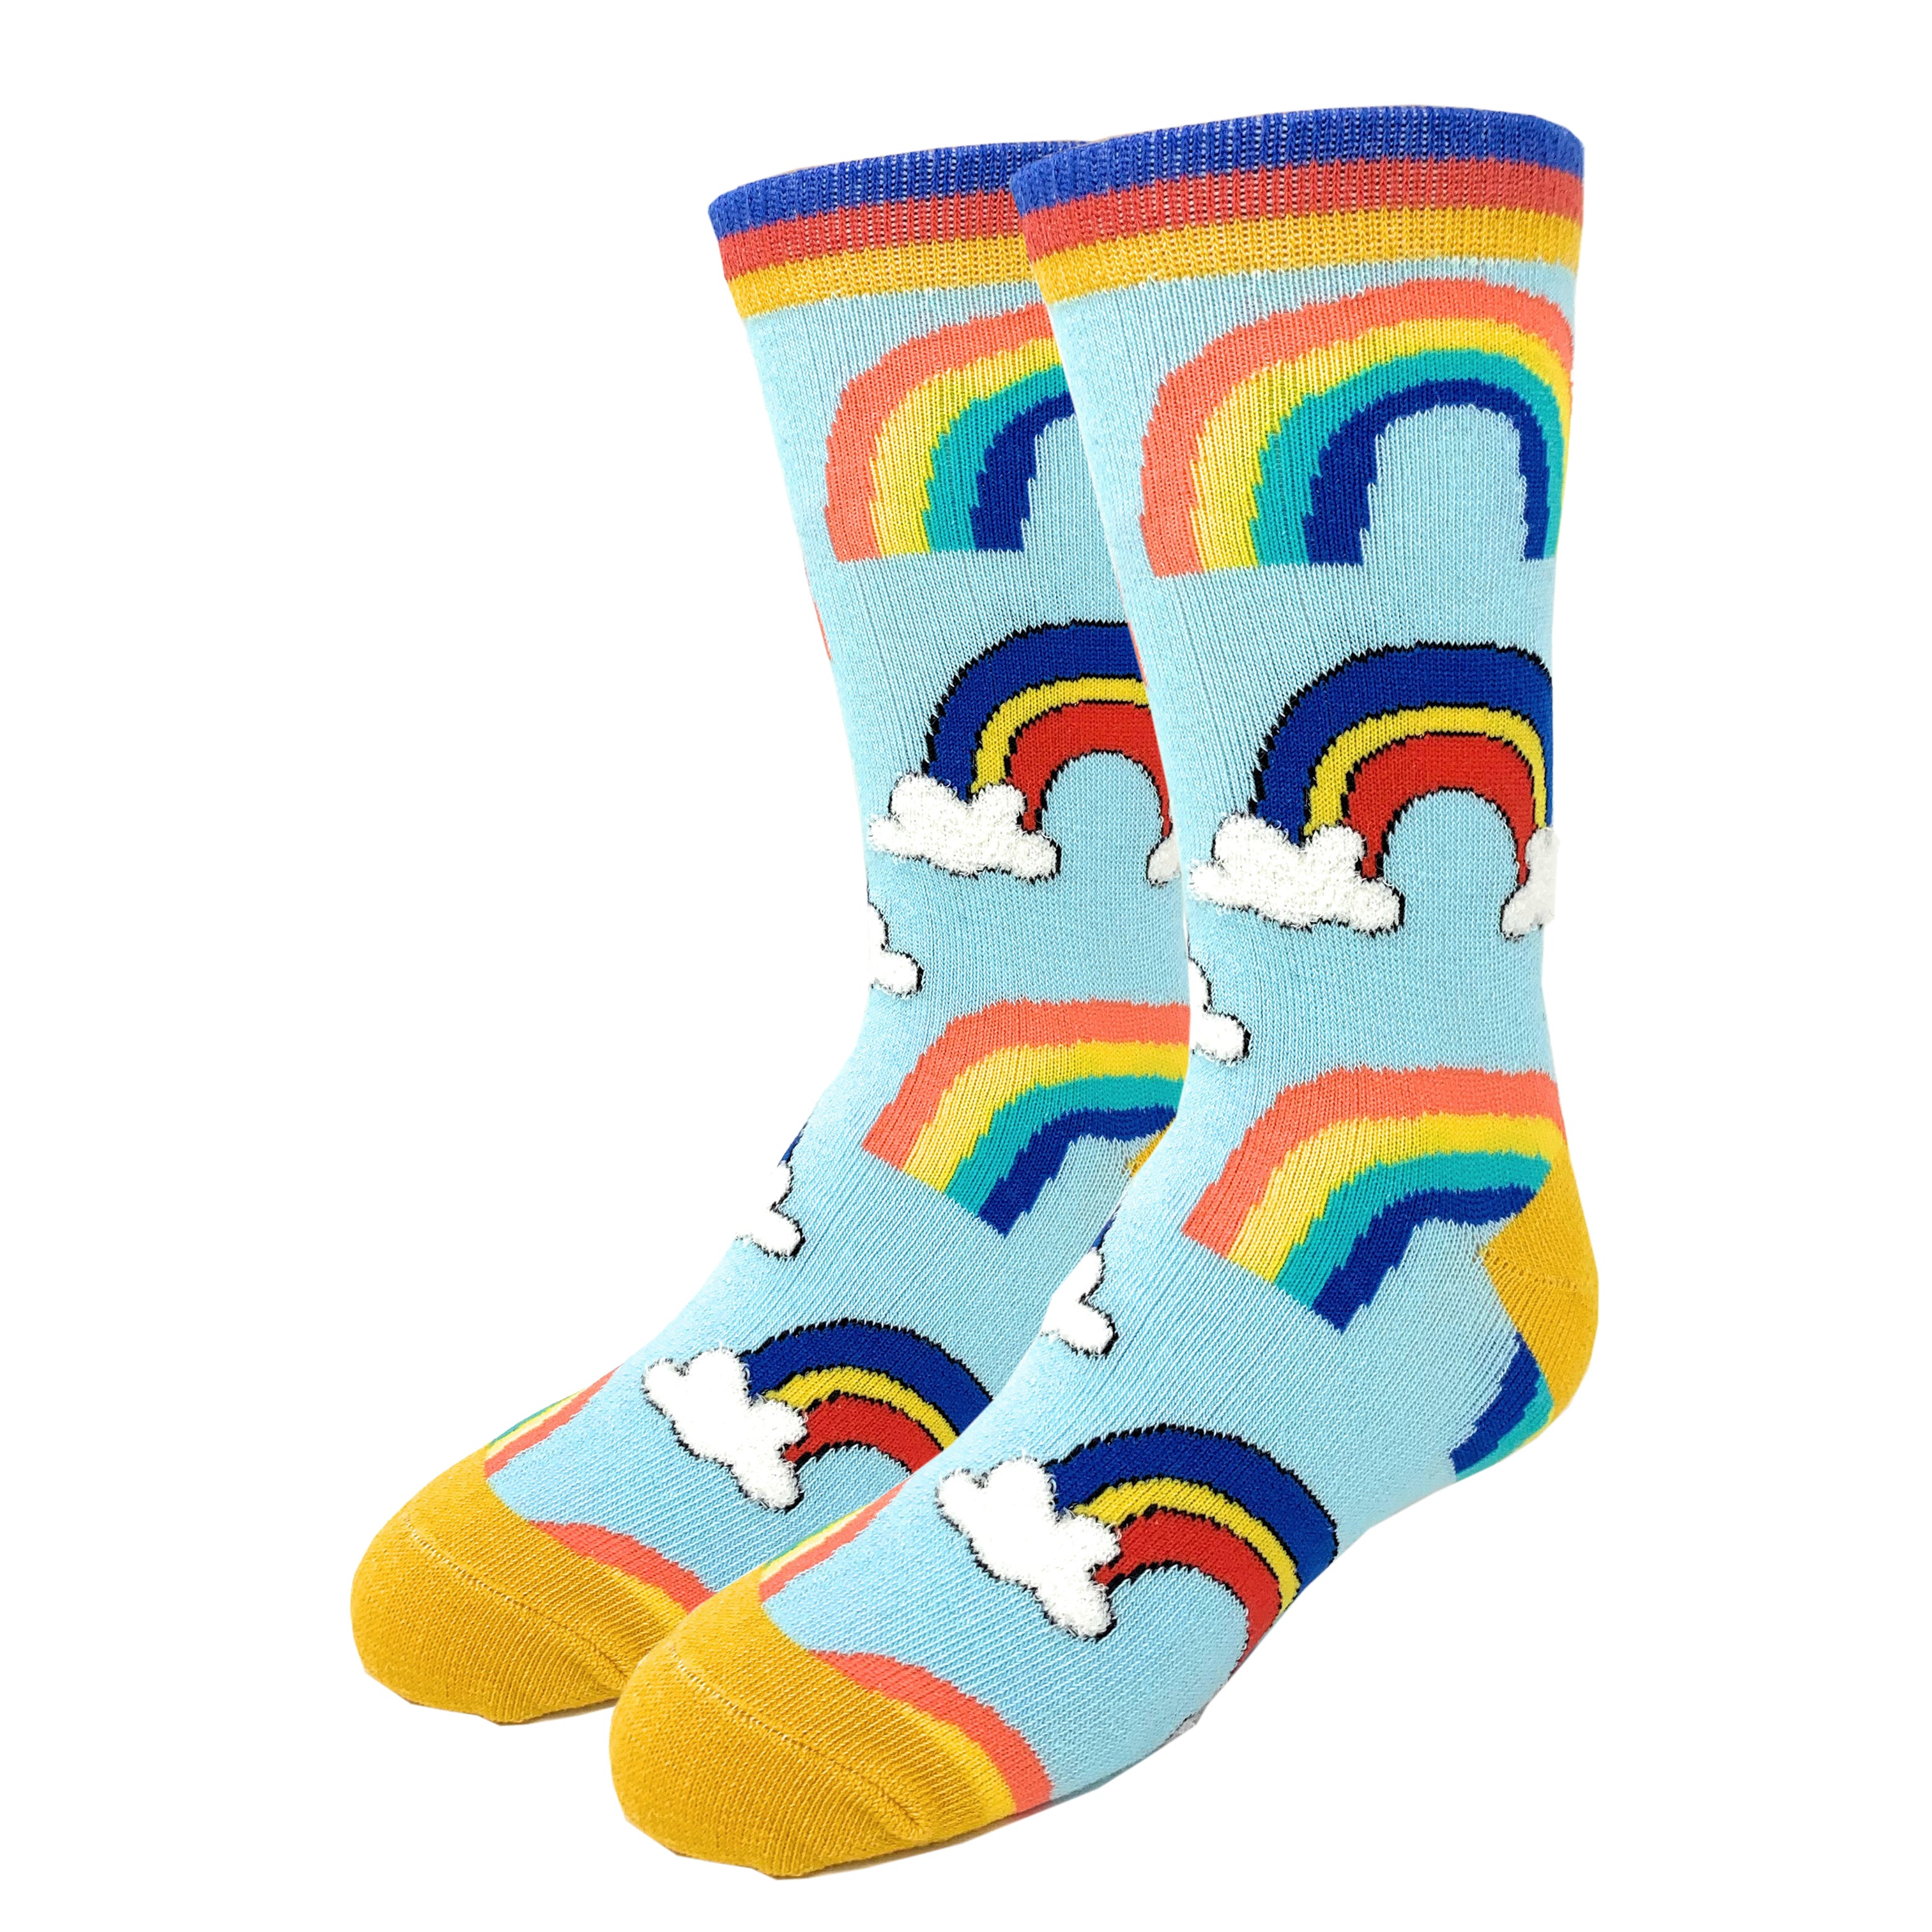 It's a Rainbow Socks | Novelty Crew Socks for Kids